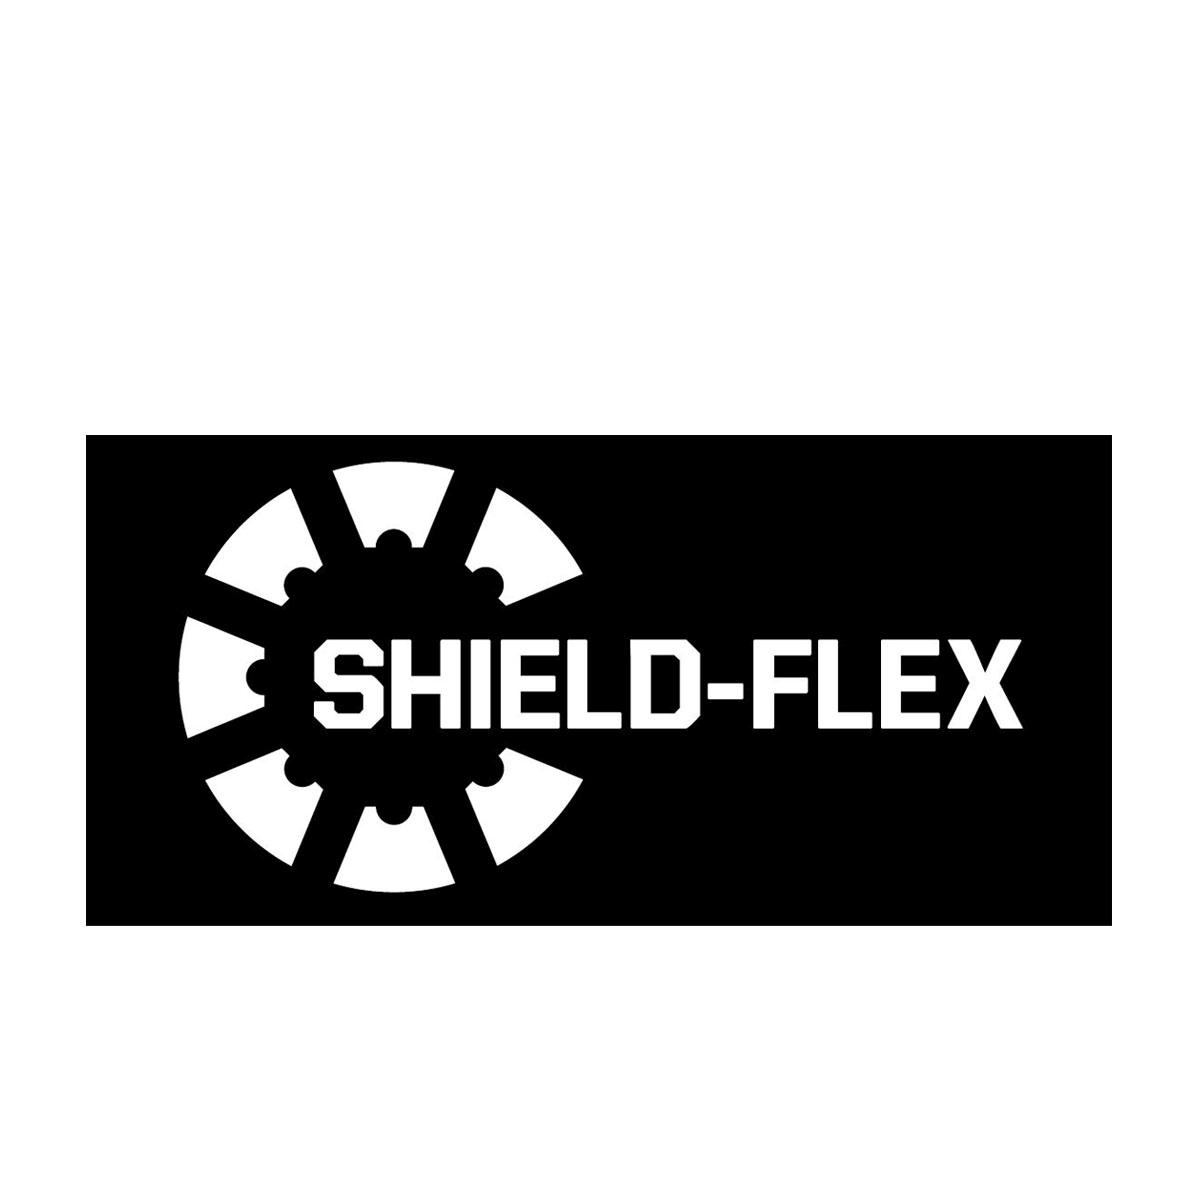 SHIELD-FLEX